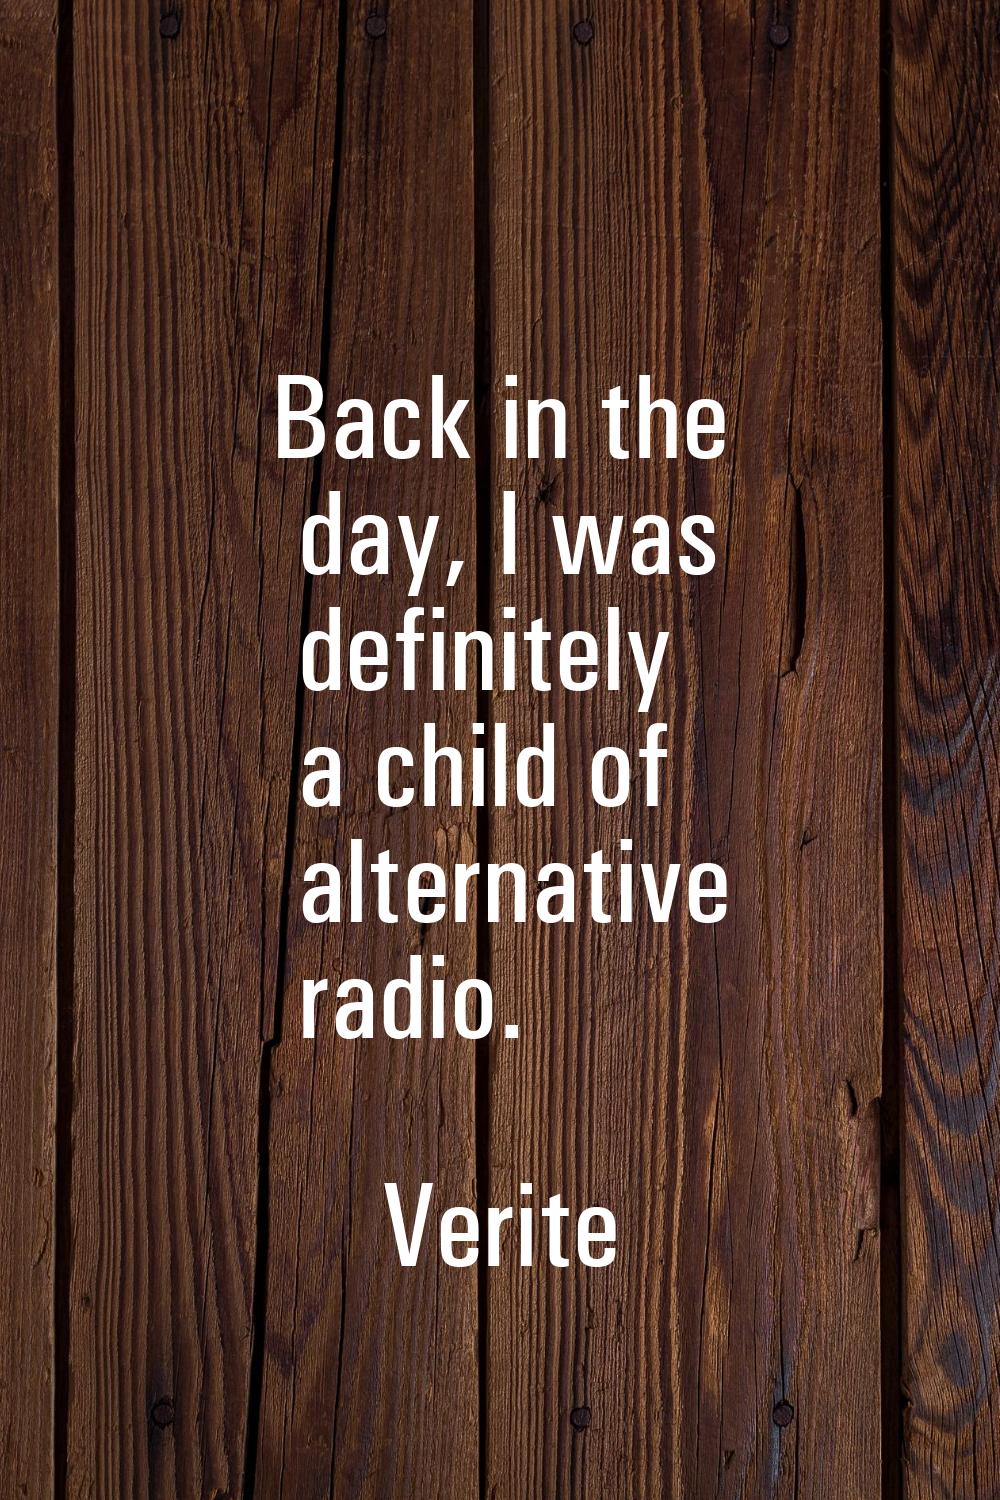 Back in the day, I was definitely a child of alternative radio.